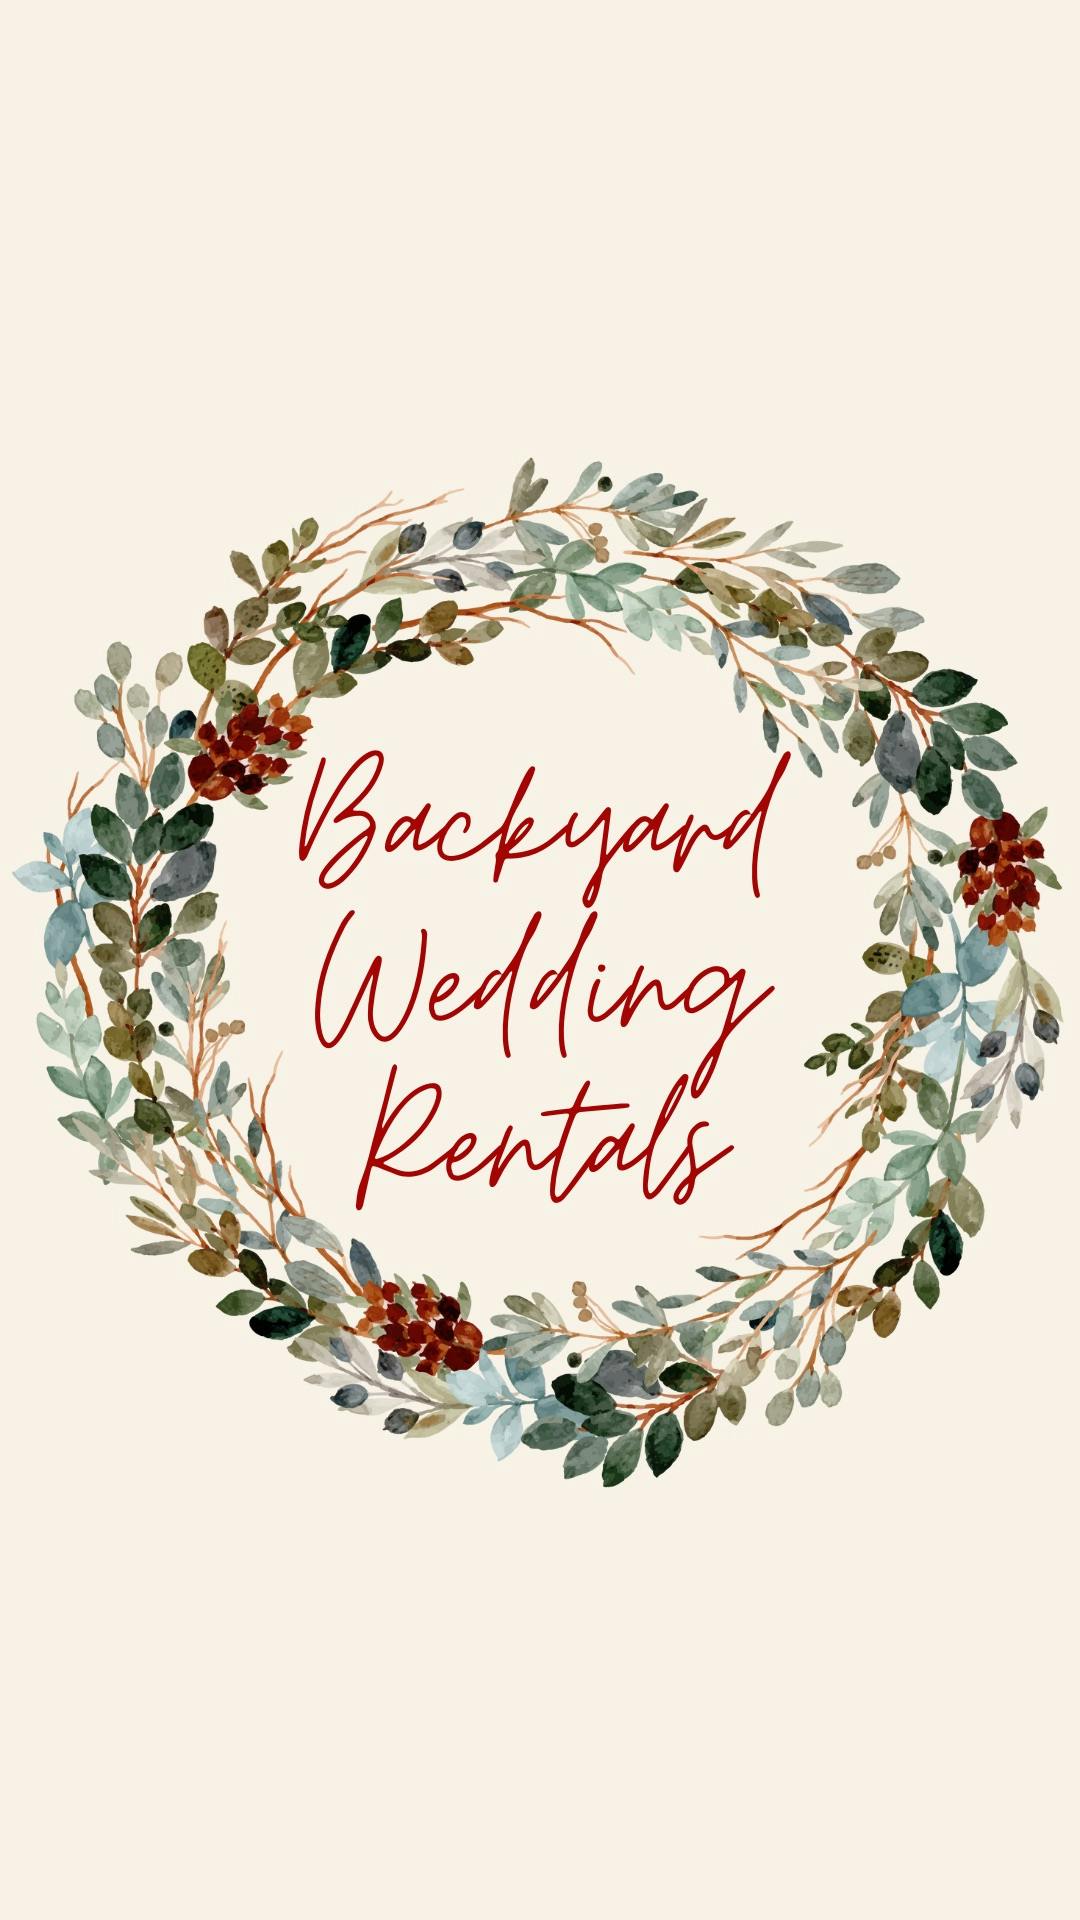 Martin Creek Backyard Wedding Deluxe Rental